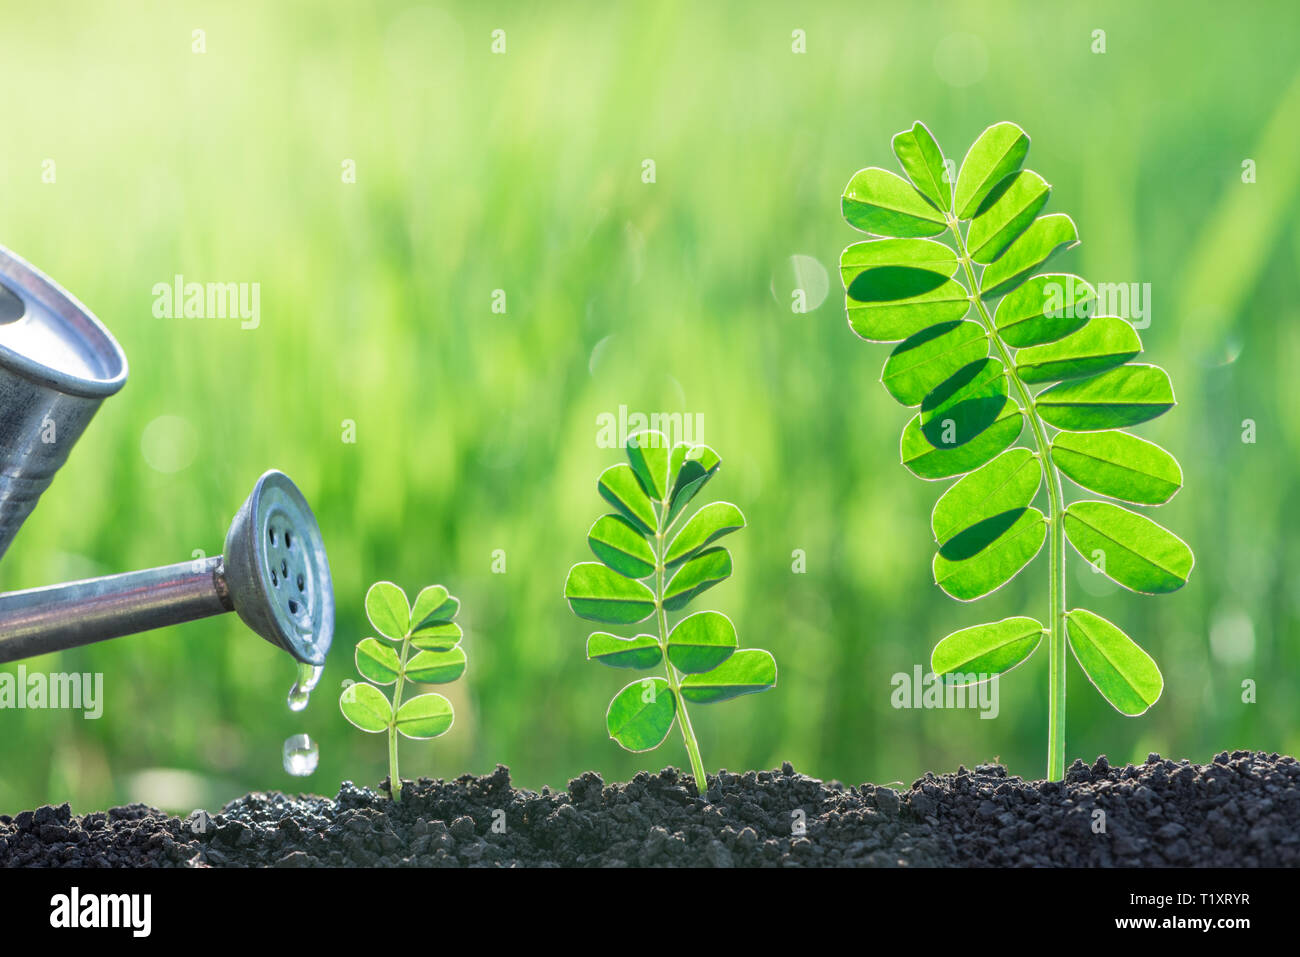 Bewässerung Sämlinge Wachstum Natur Konzept Stockfoto